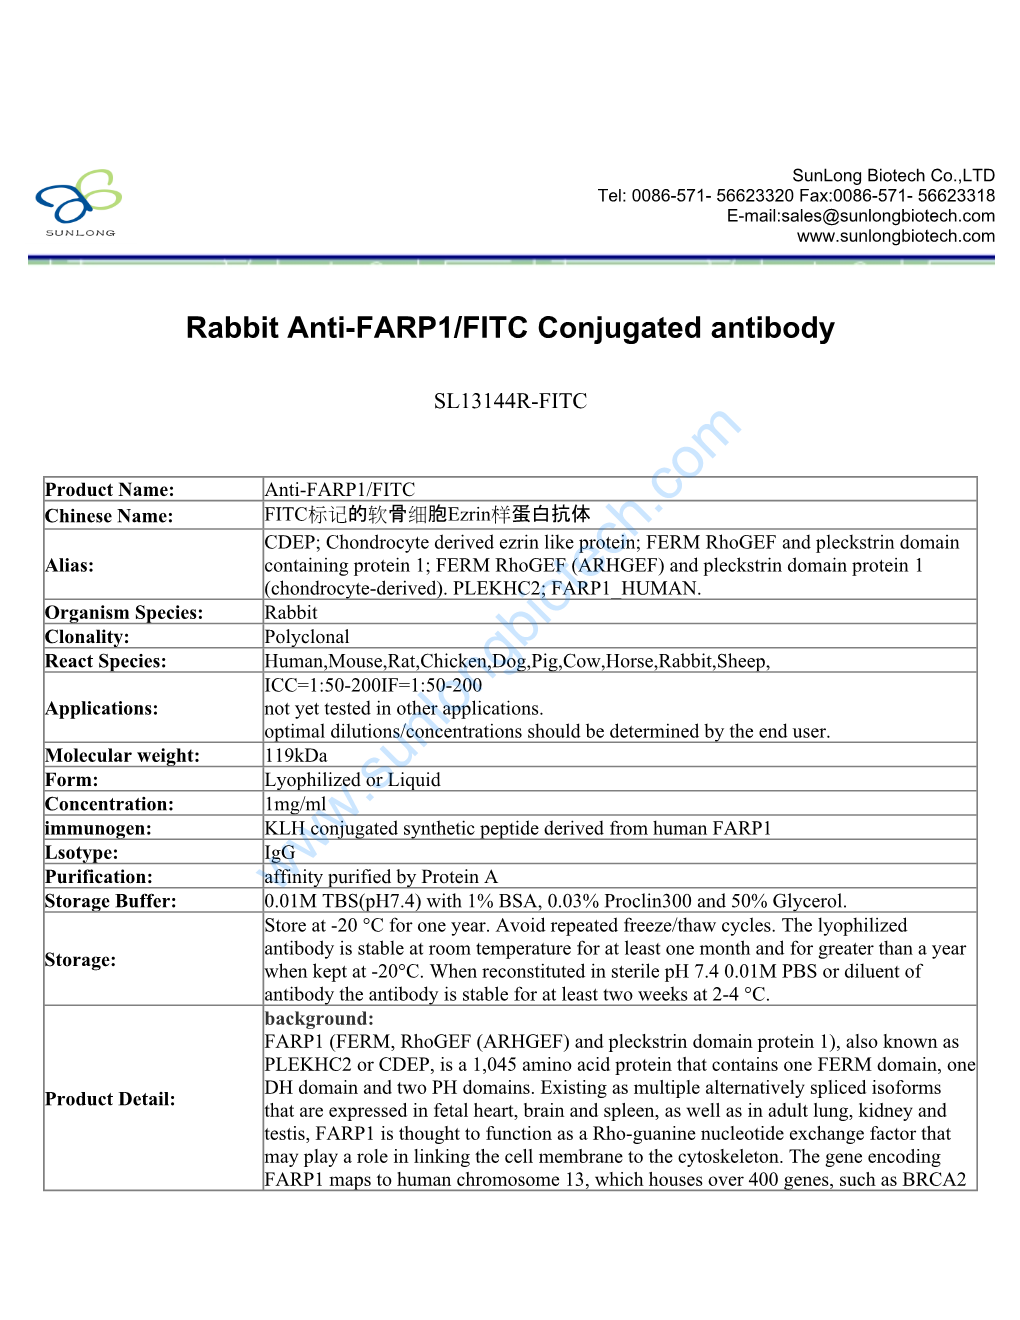 Rabbit Anti-FARP1/FITC Conjugated Antibody